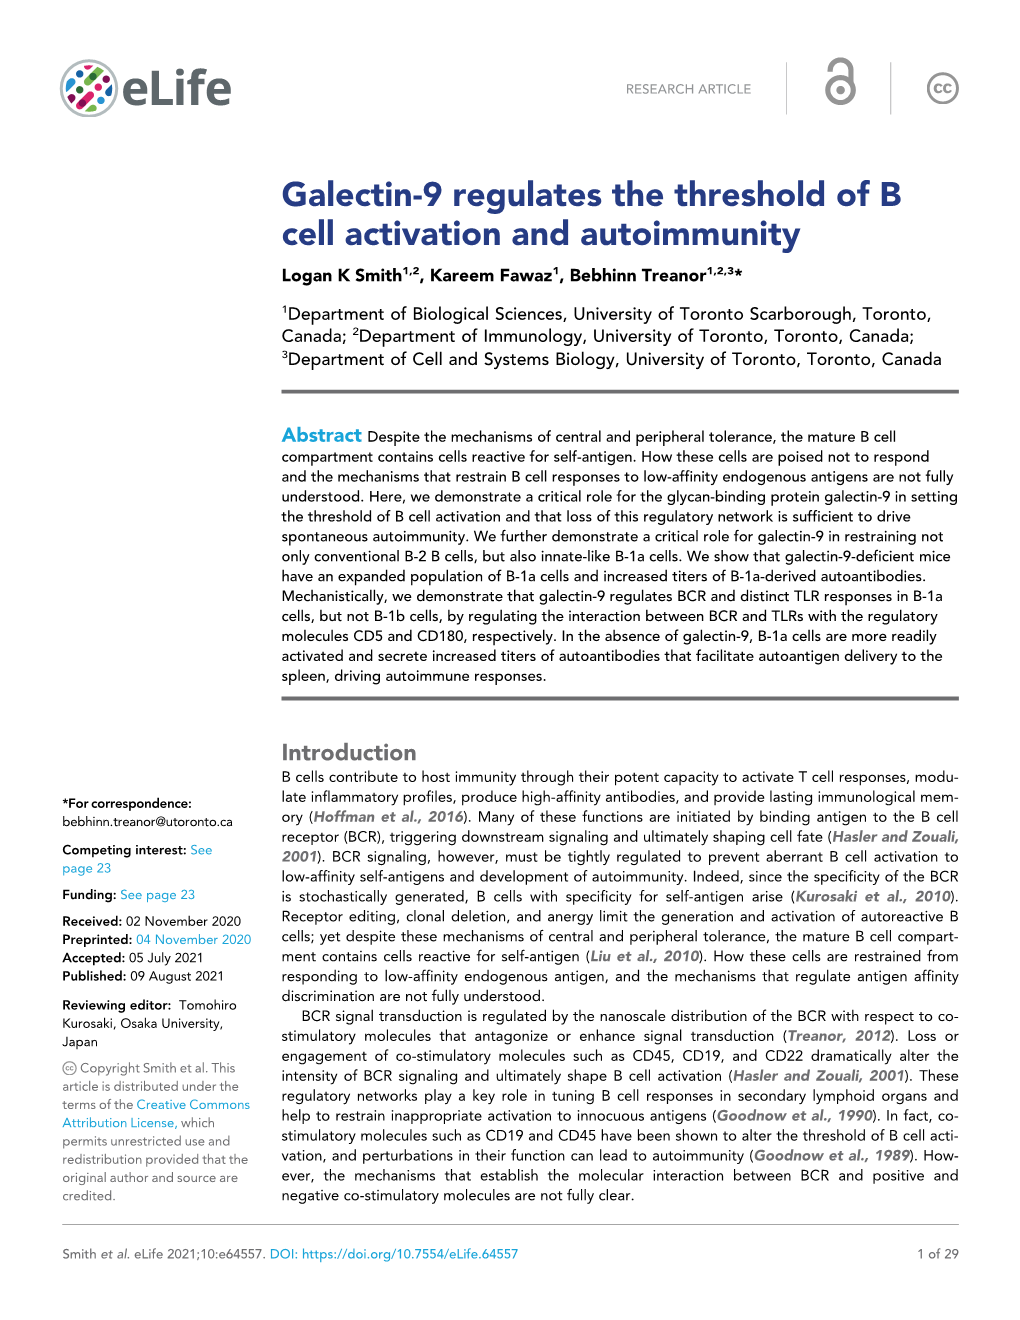 Galectin-9 Regulates the Threshold of B Cell Activation and Autoimmunity Logan K Smith1,2, Kareem Fawaz1, Bebhinn Treanor1,2,3*